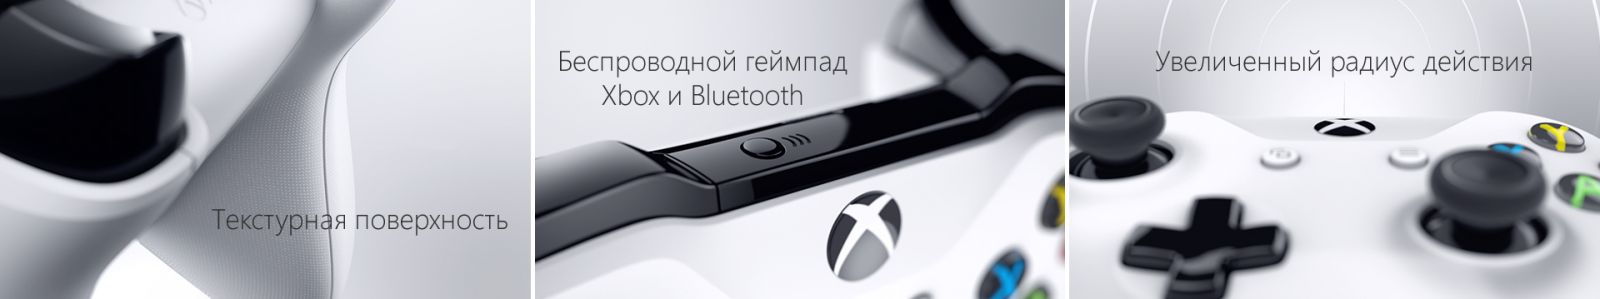 Xbox One S 1TB + FIFA 17 image7